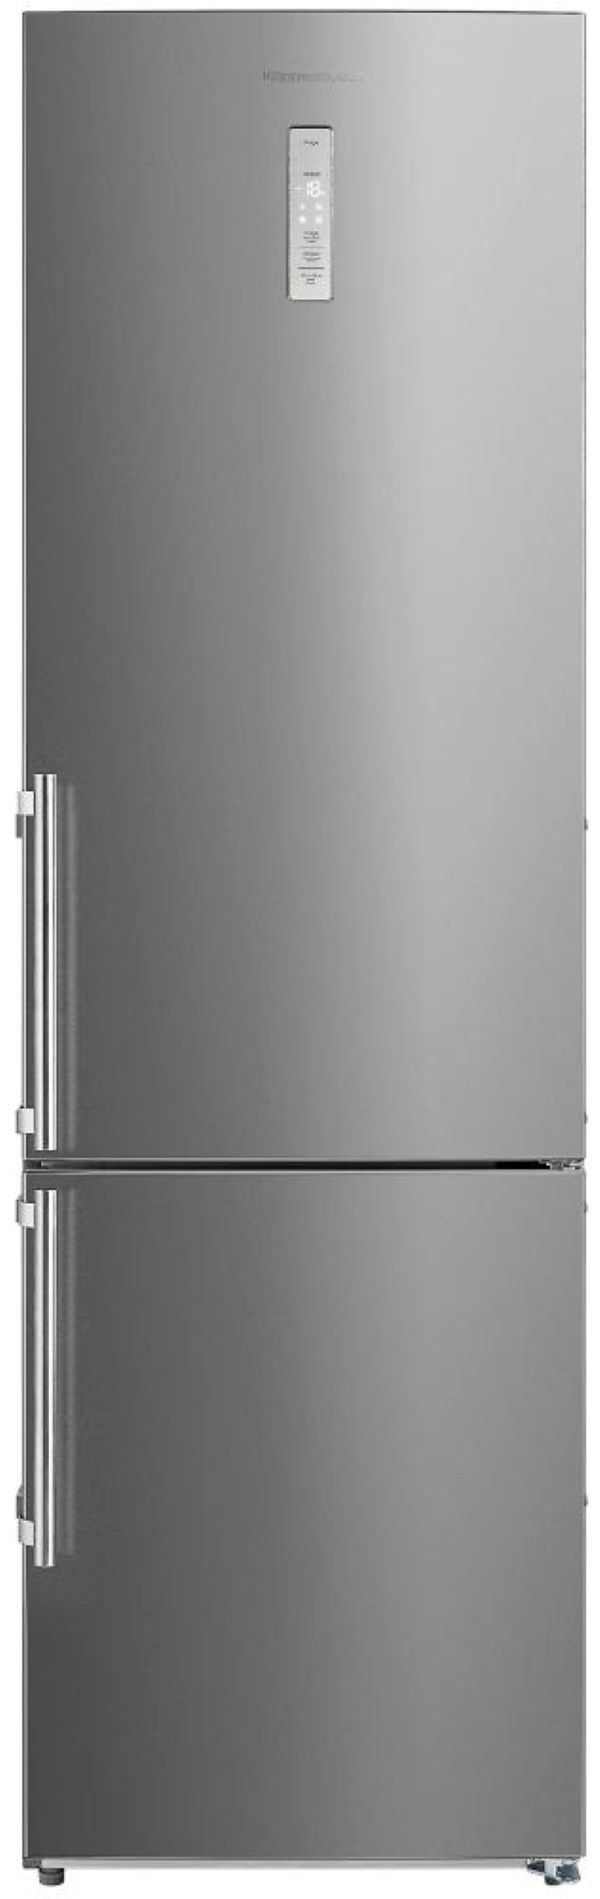 Холодильник NoBrand FKG 6600.0 E-02 серебристый shimano цепь shimano ultegra 6600 10ск 114 зв амп пин 2шт серебристый